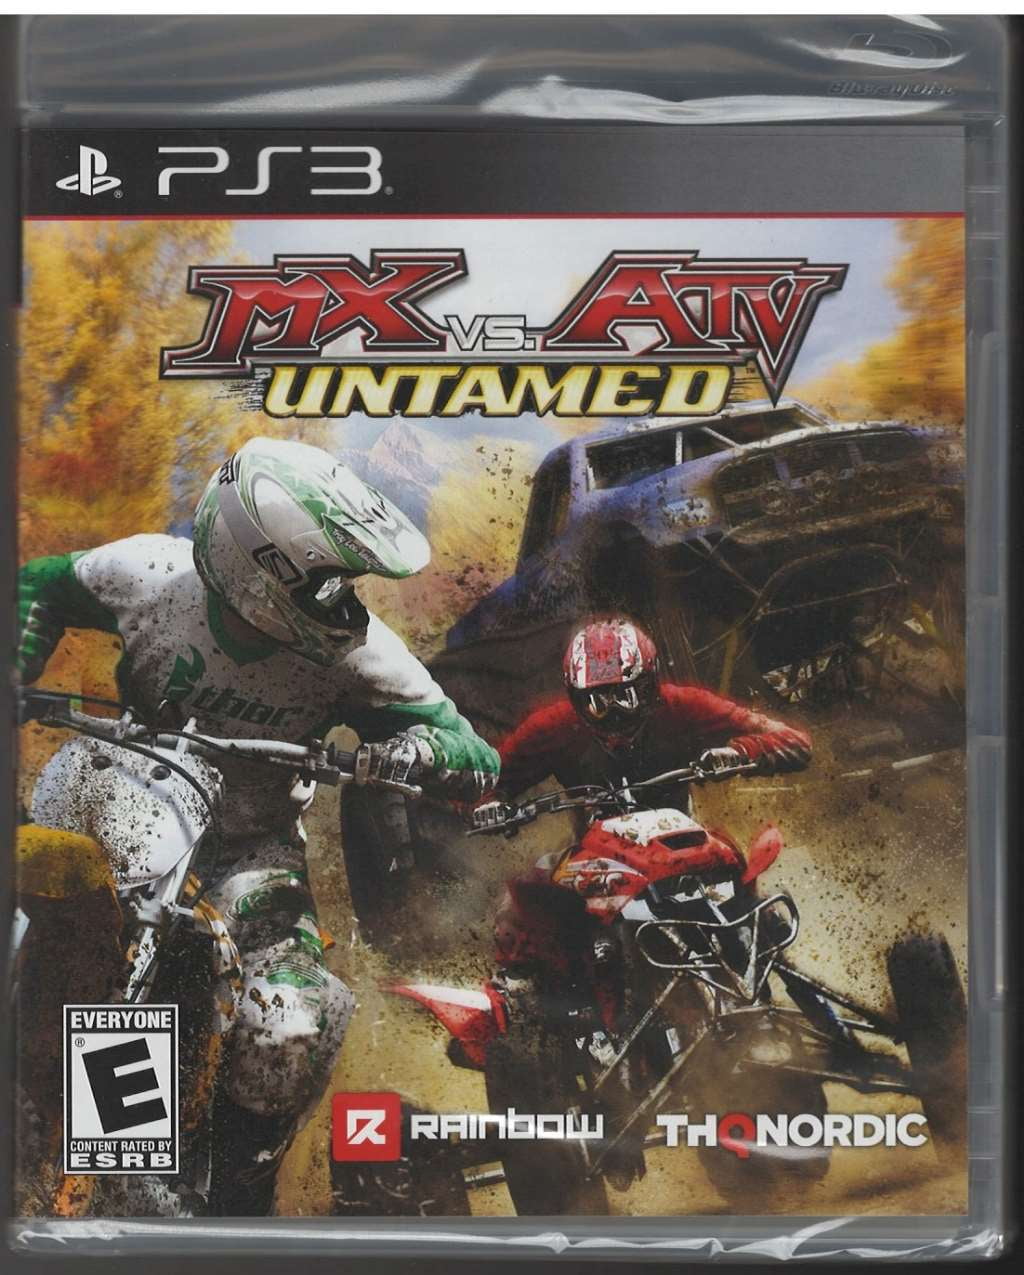  Mx vs. ATV: Supercross - PlayStation 3 : Nordic Games Na Inc:  Video Games